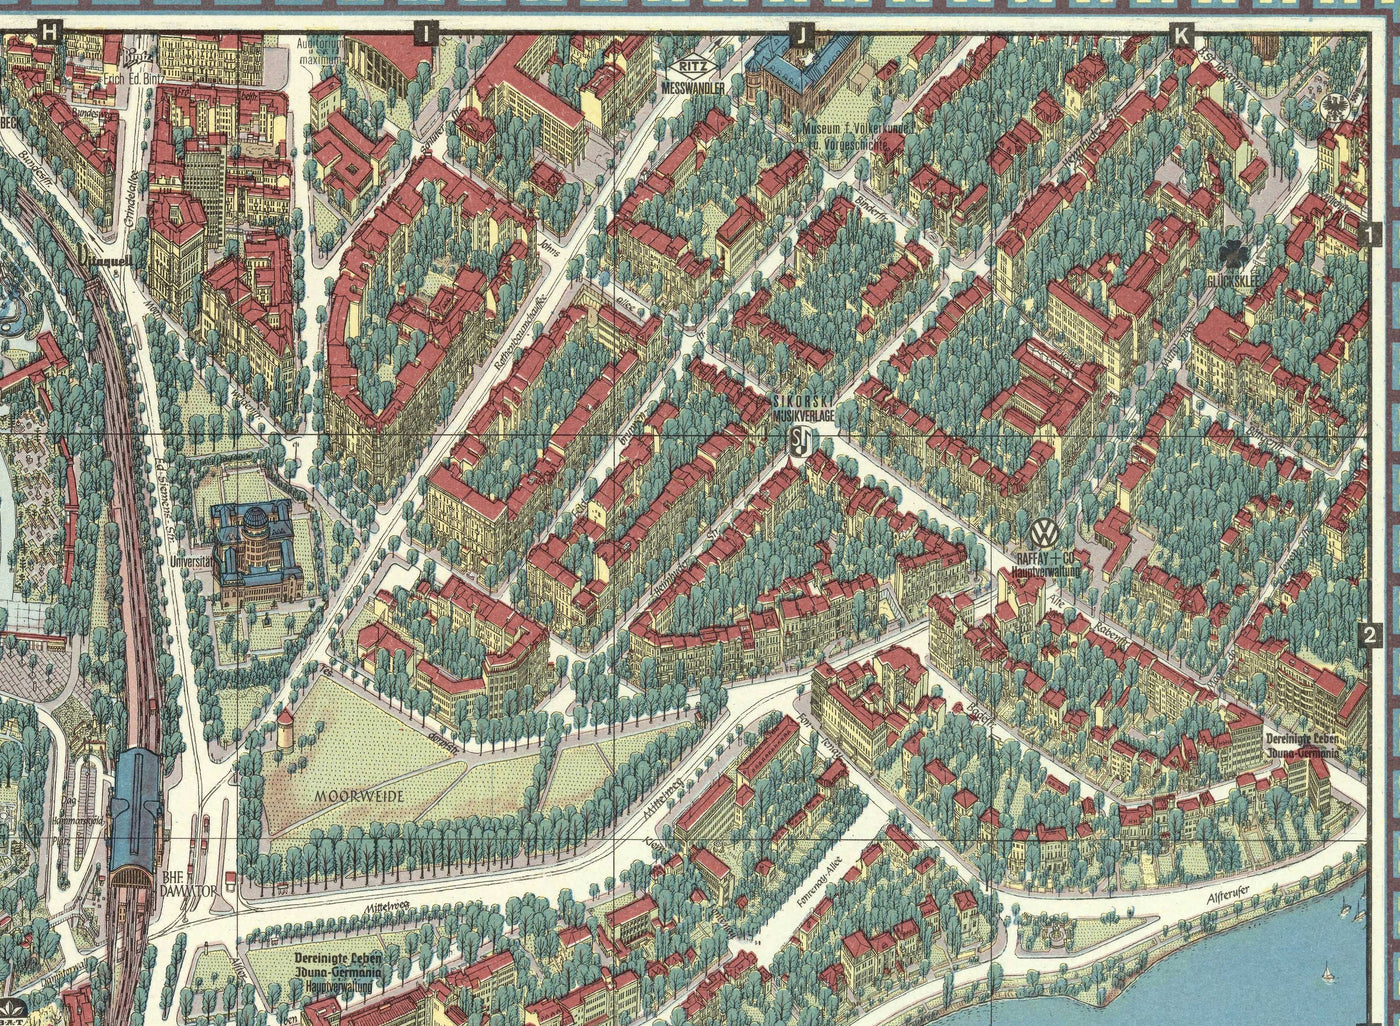 Mapa antiguo de Hamburgo en 1964 por Hermann Bollman - Binnenalster, Alster Lakes, Heiligengeistfeld, Planten un Blomen, Central Station